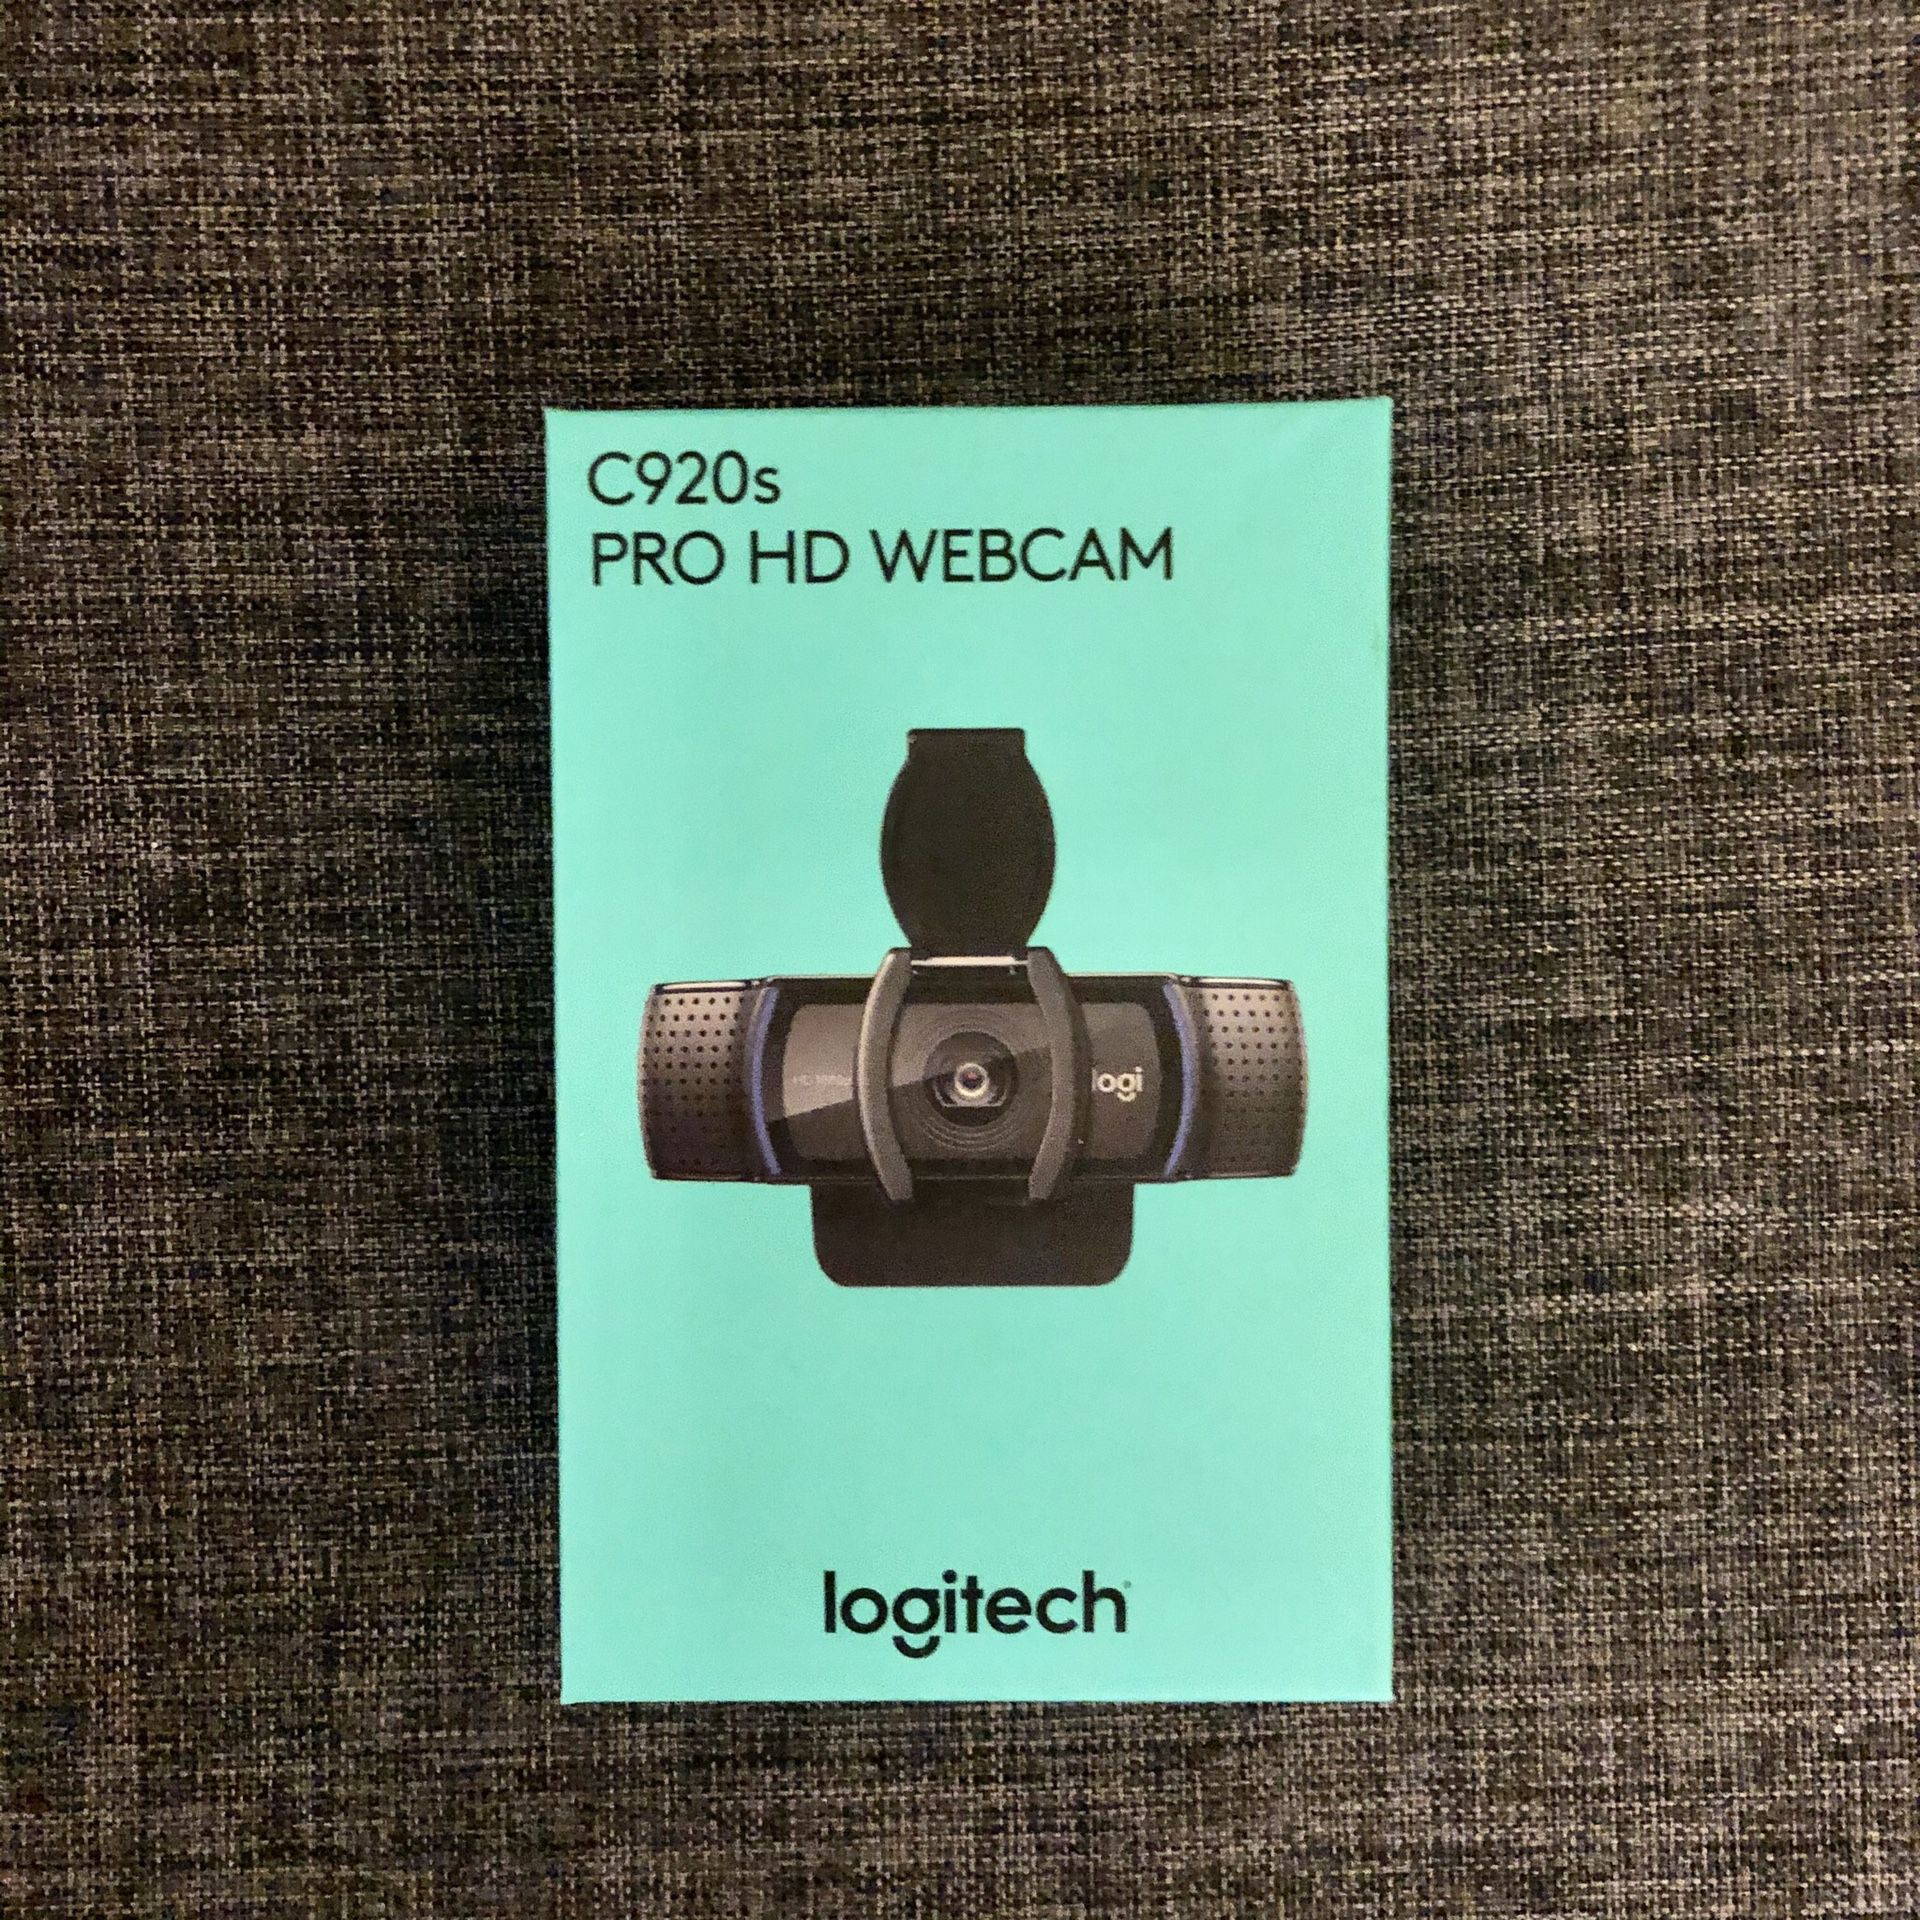 Logitech C920s Pro HD 1080p Webcam with Privacy Shutter (New)